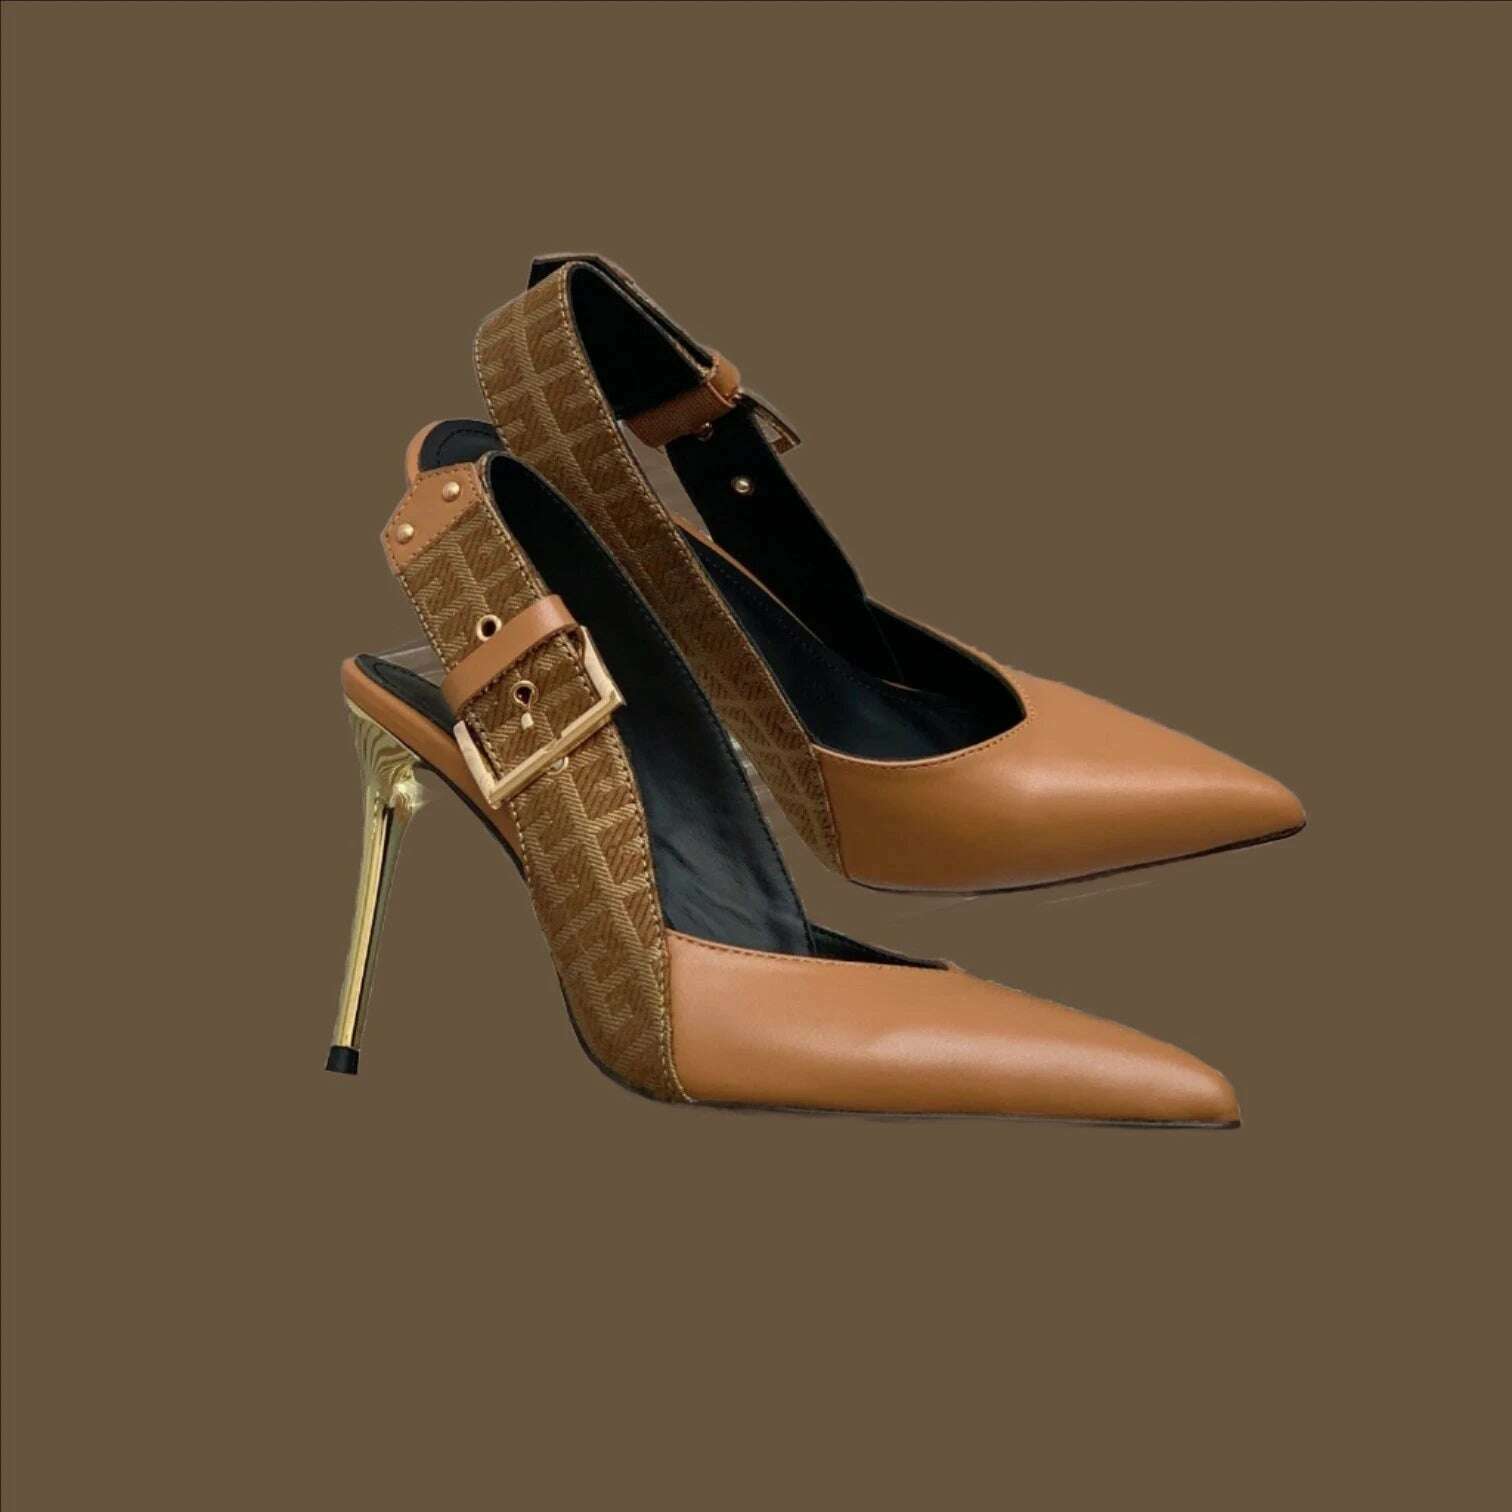 KIMLUD, Spring Autumn Women Women Pumps Fashion Genuine Leather Summer Sandals Super High Heels Print Pumps Slingbacks Party Dress Shoes, as show / 42, KIMLUD Womens Clothes